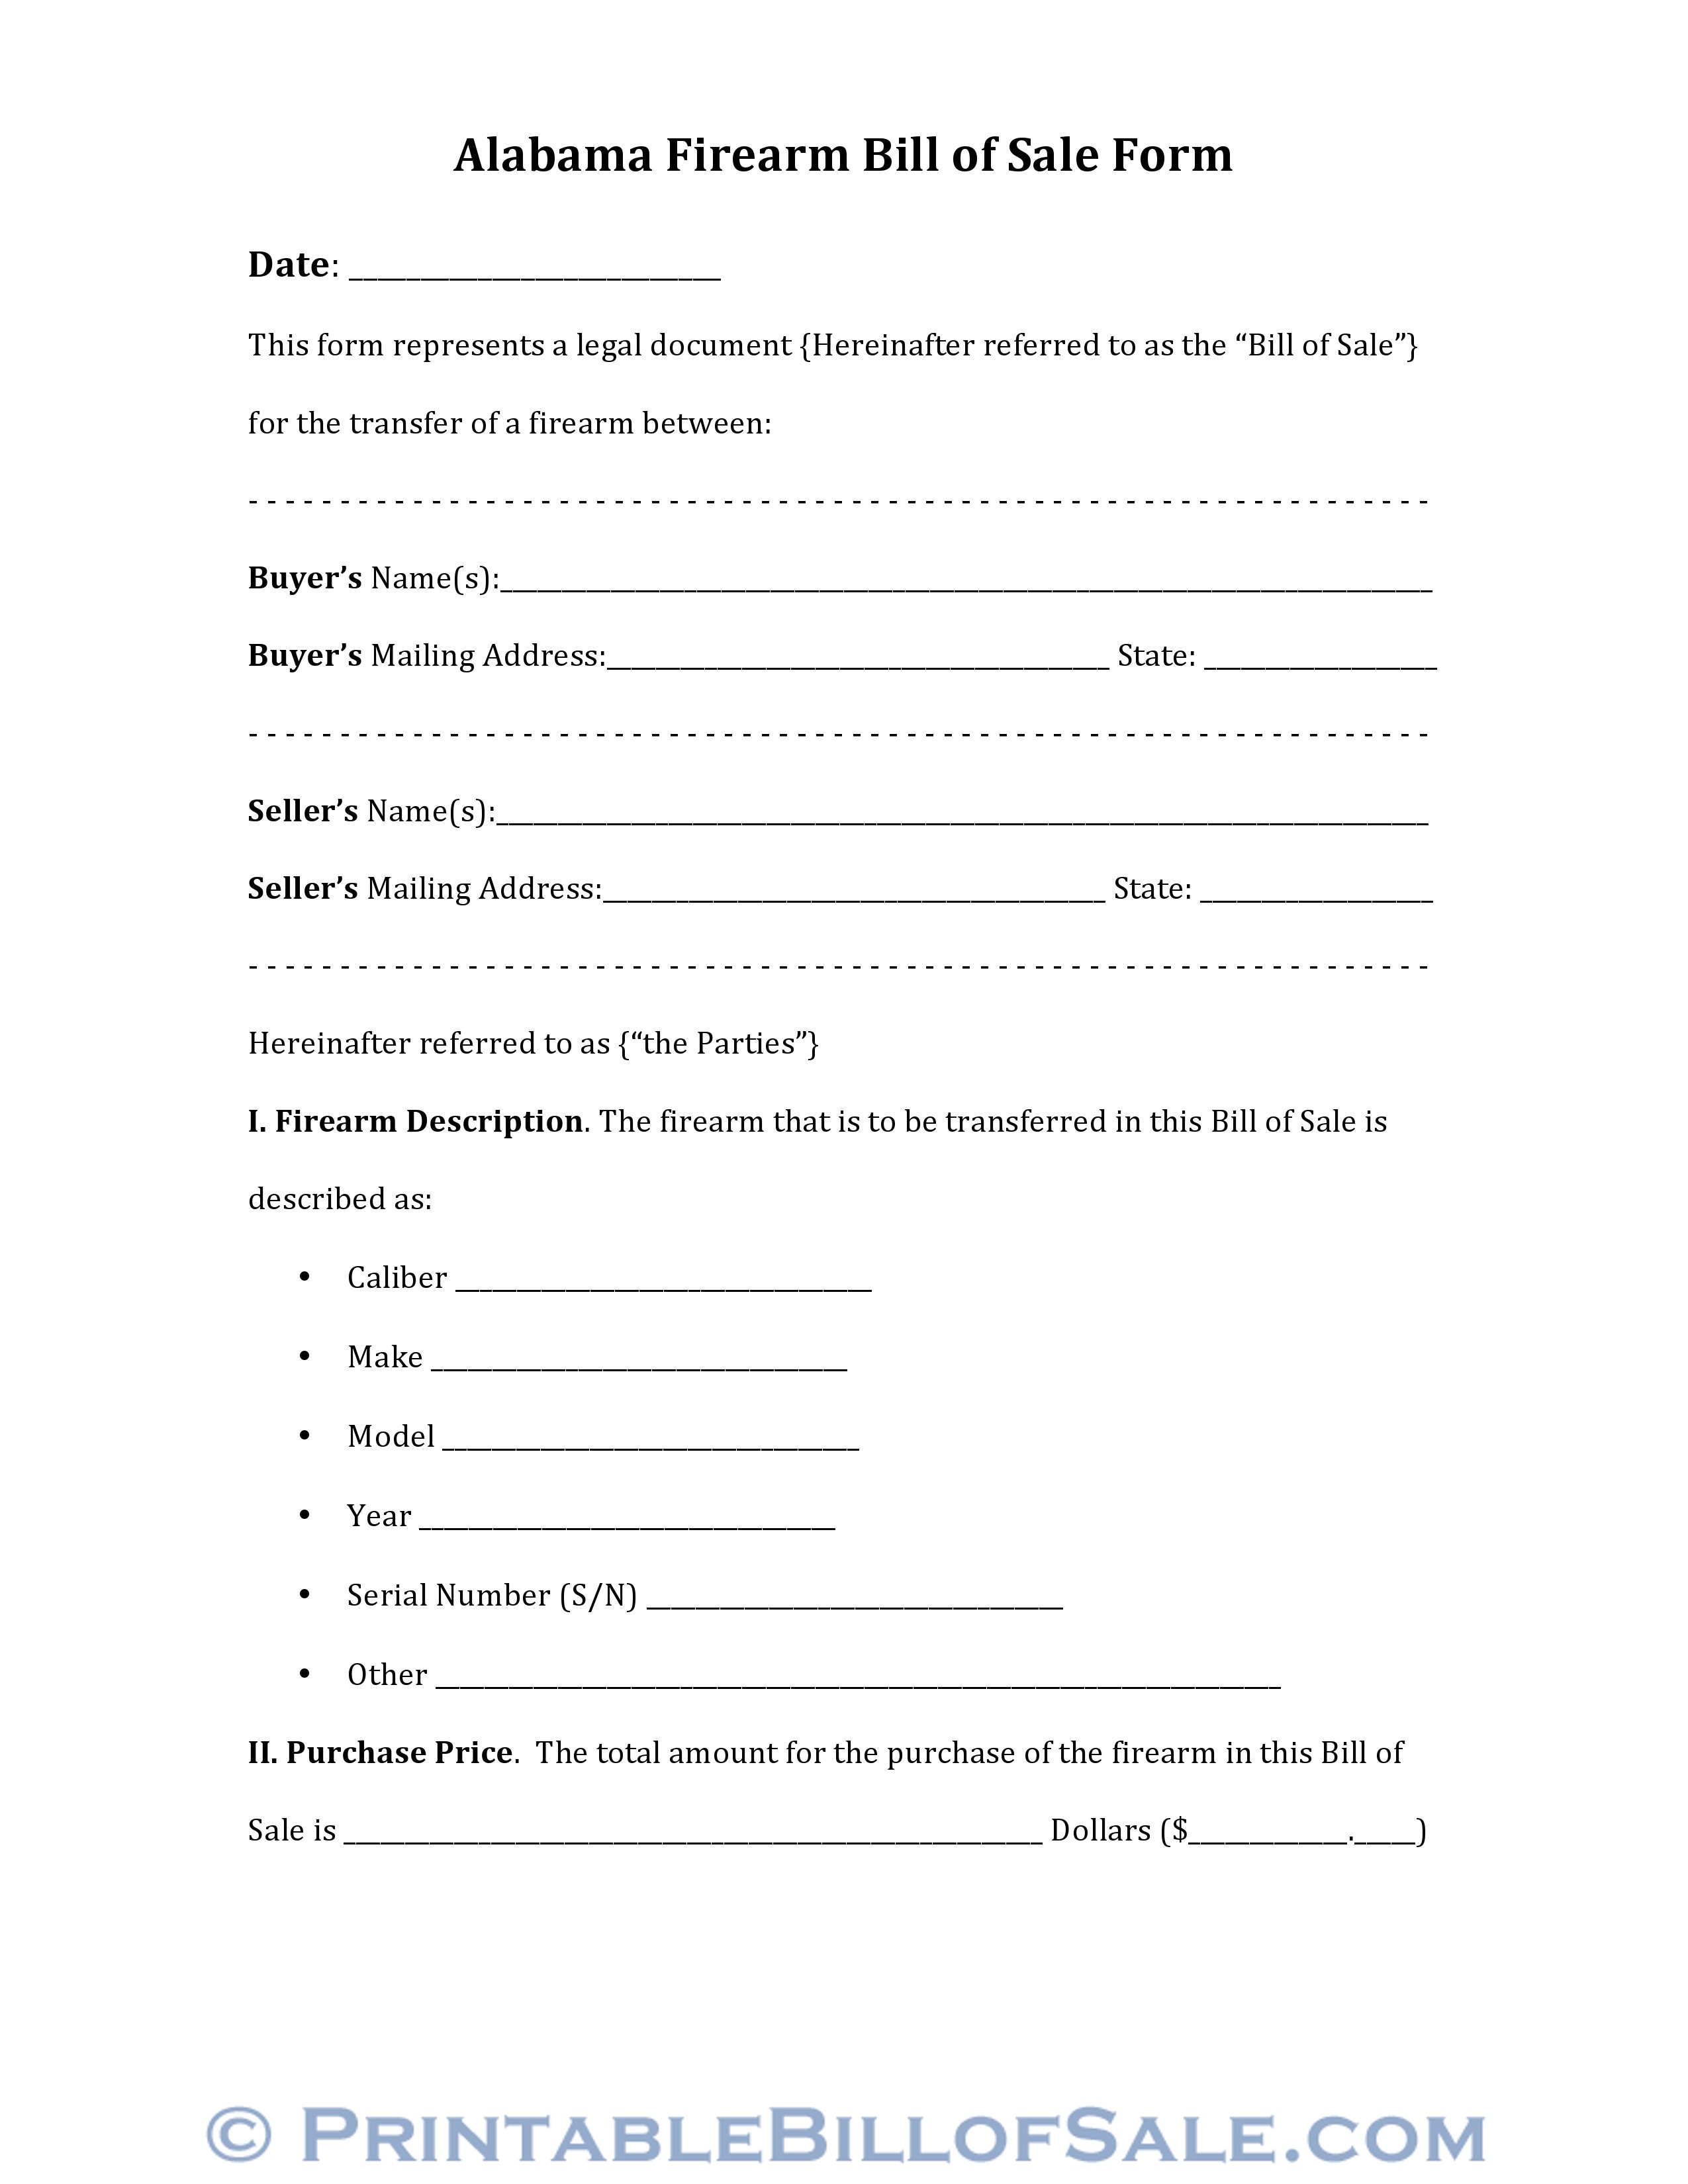 free alabama firearm bill of sale form download pdf word template